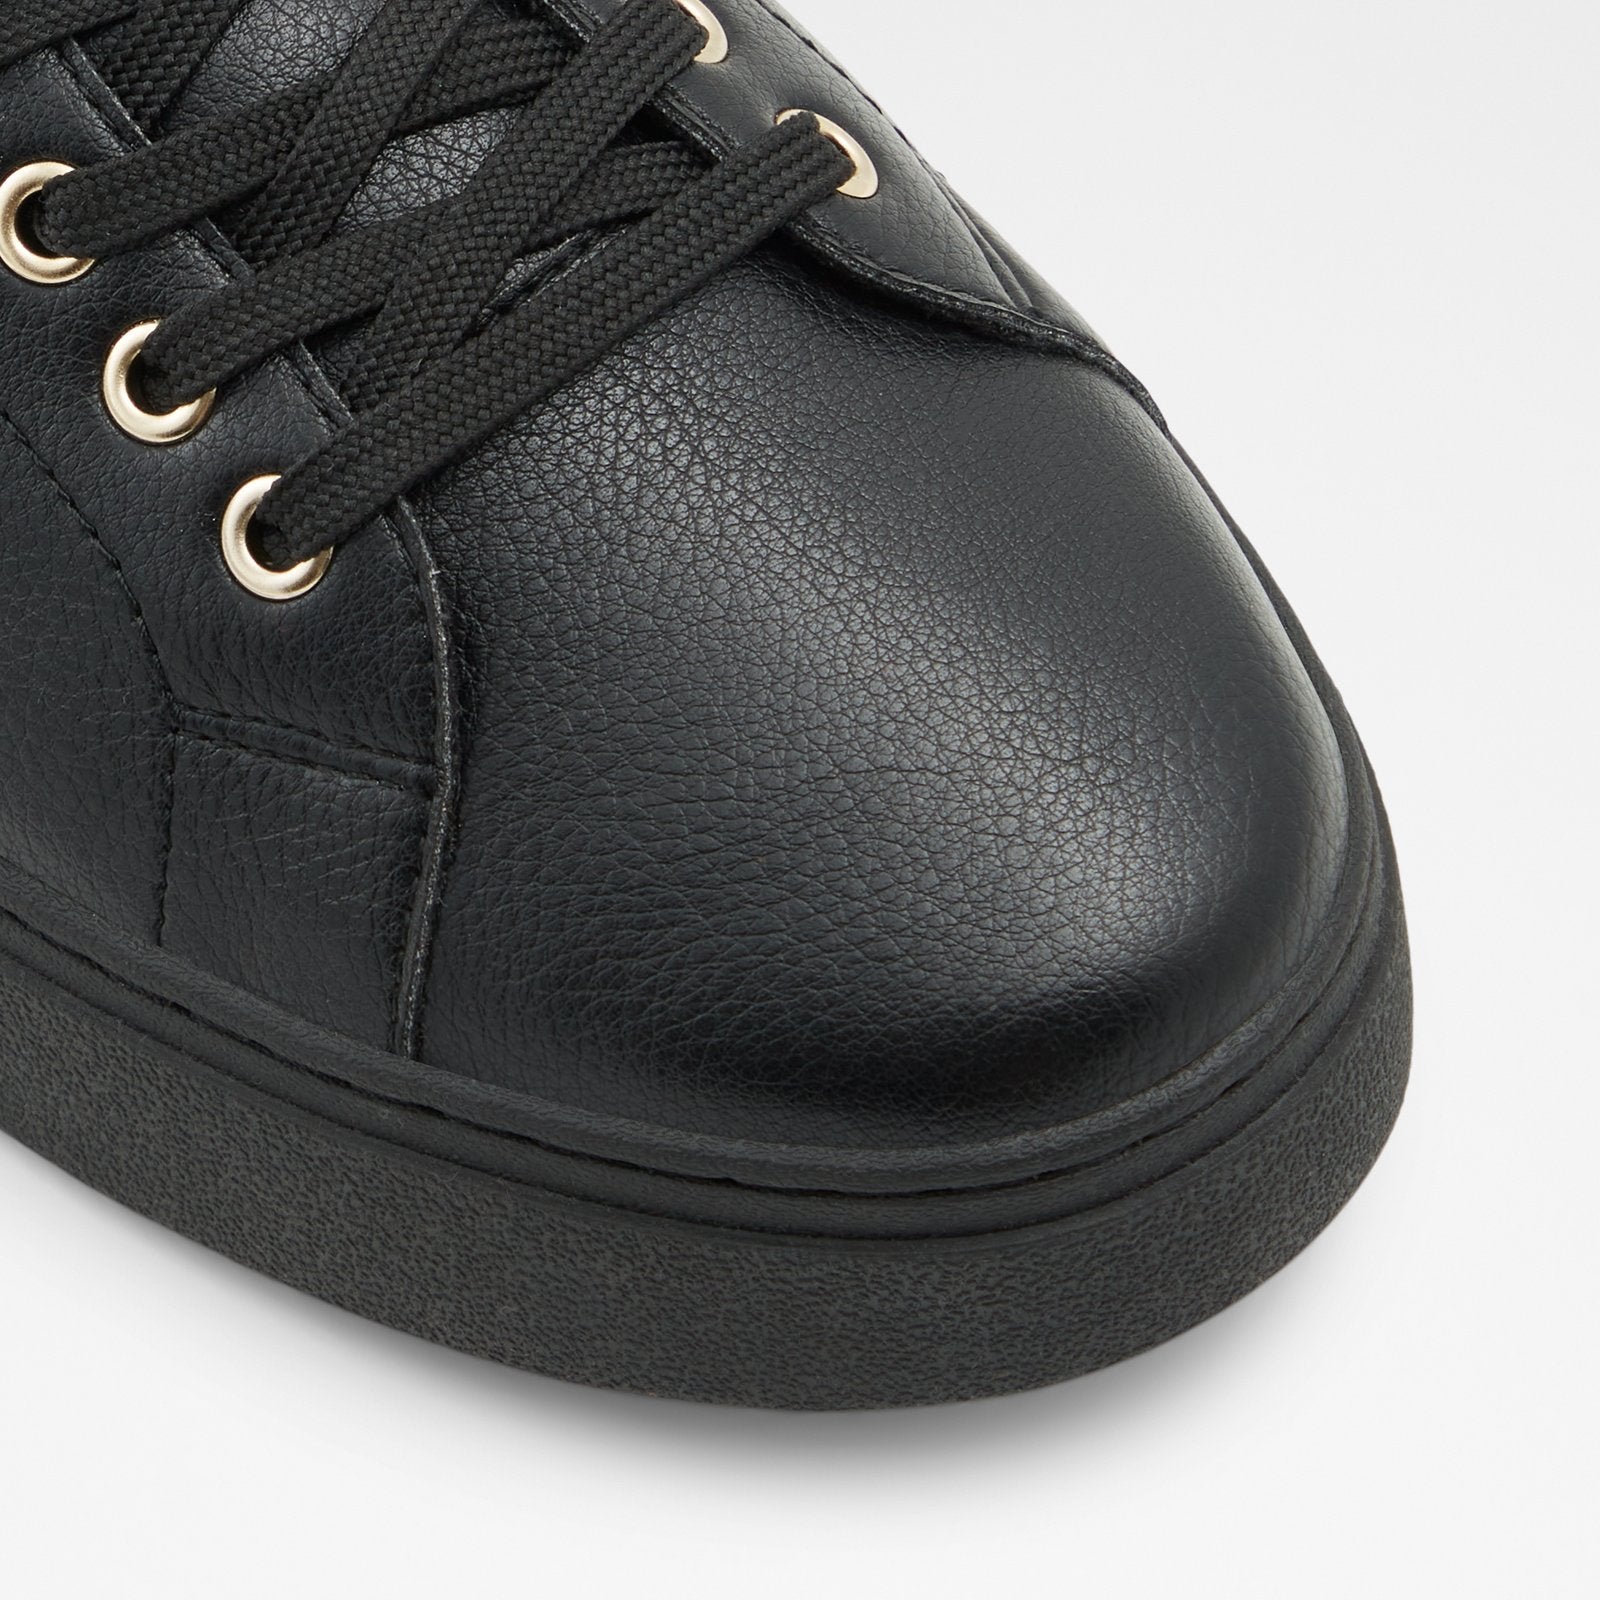 Agassi Men Shoes - Black - ALDO KSA